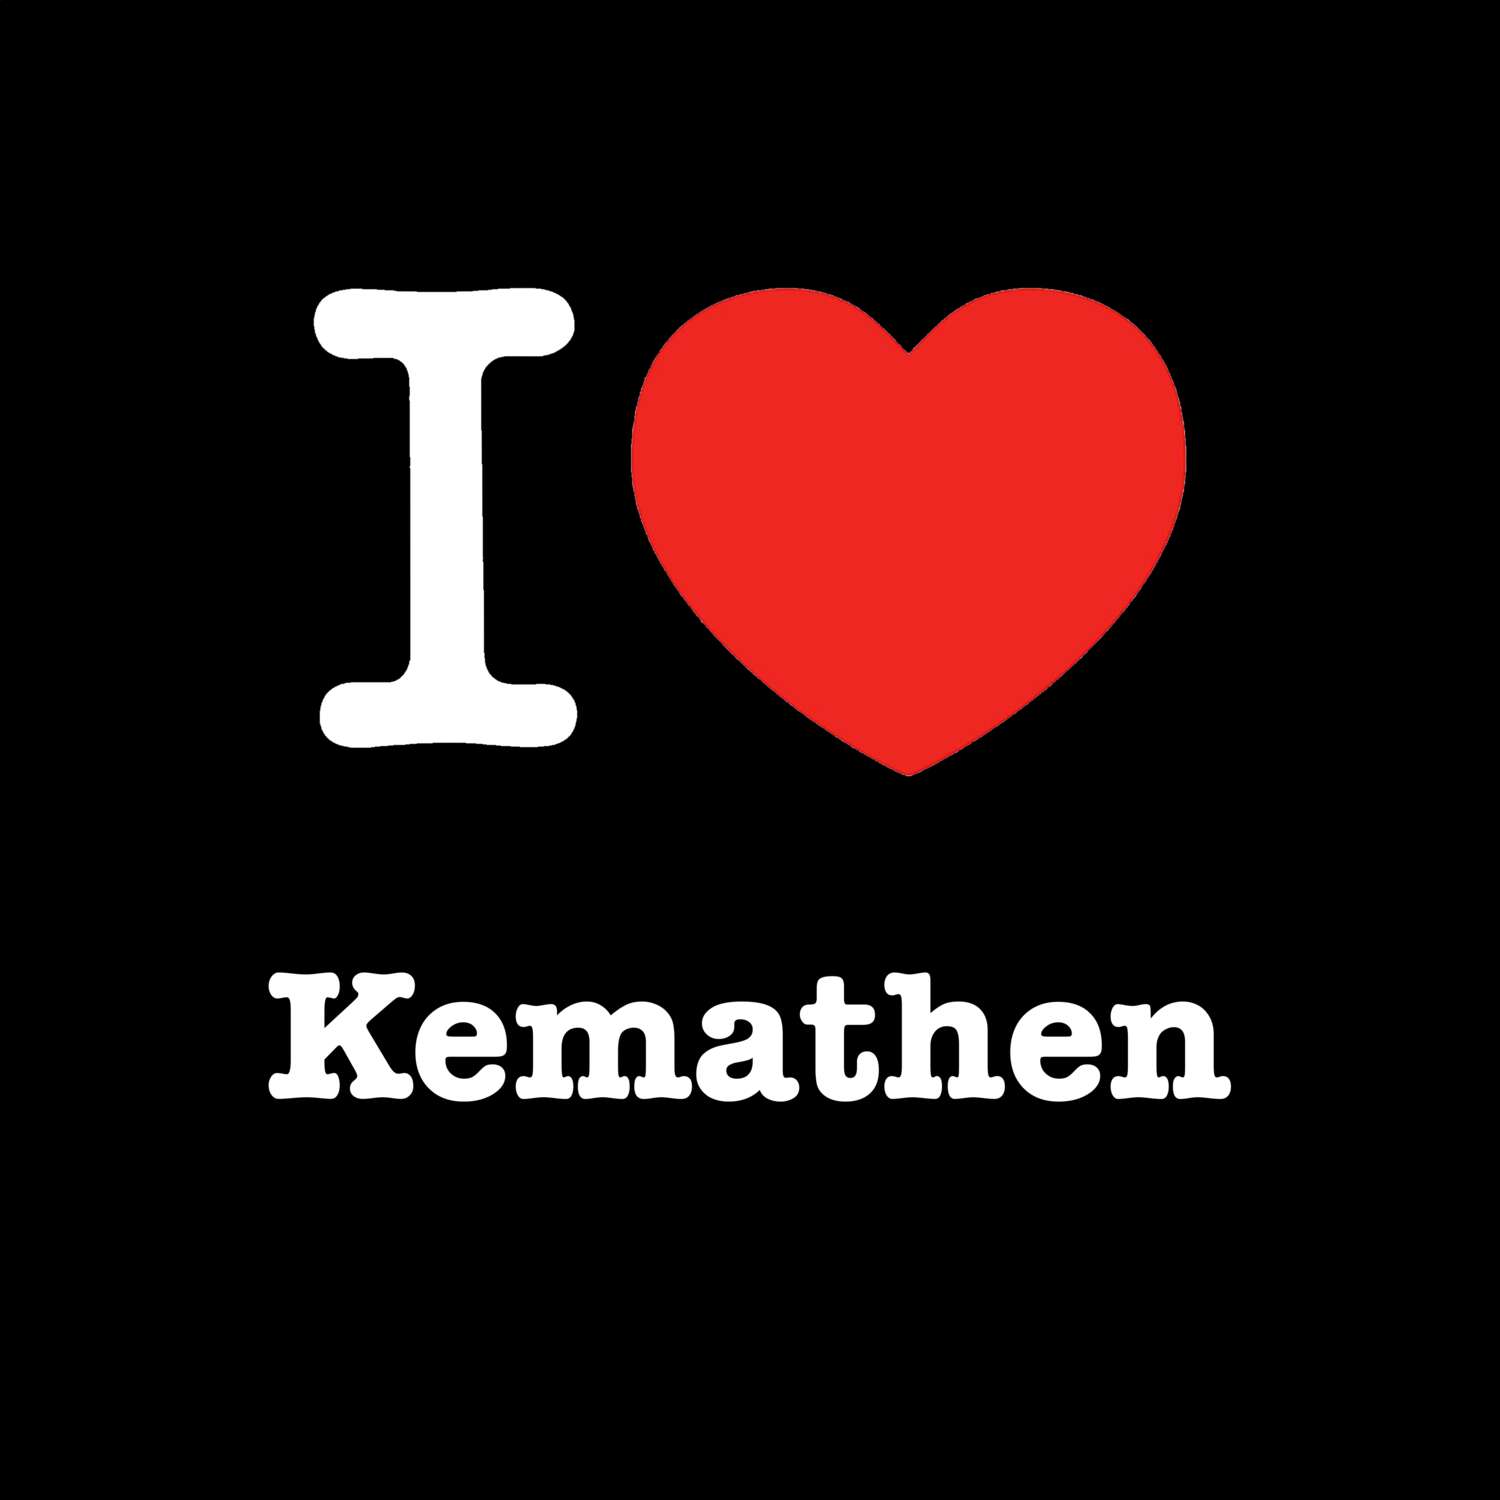 Kemathen T-Shirt »I love«